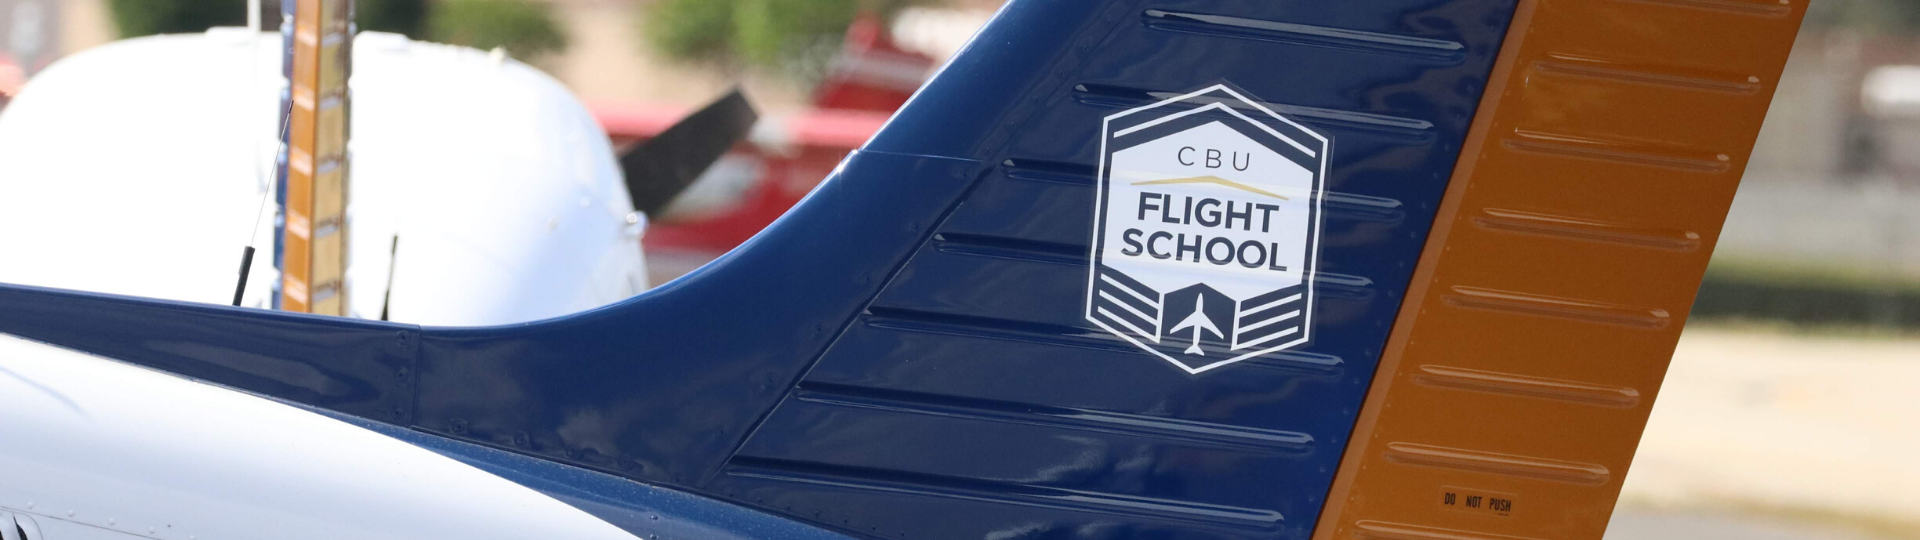 cbu plane that says "cbu flight school" on it